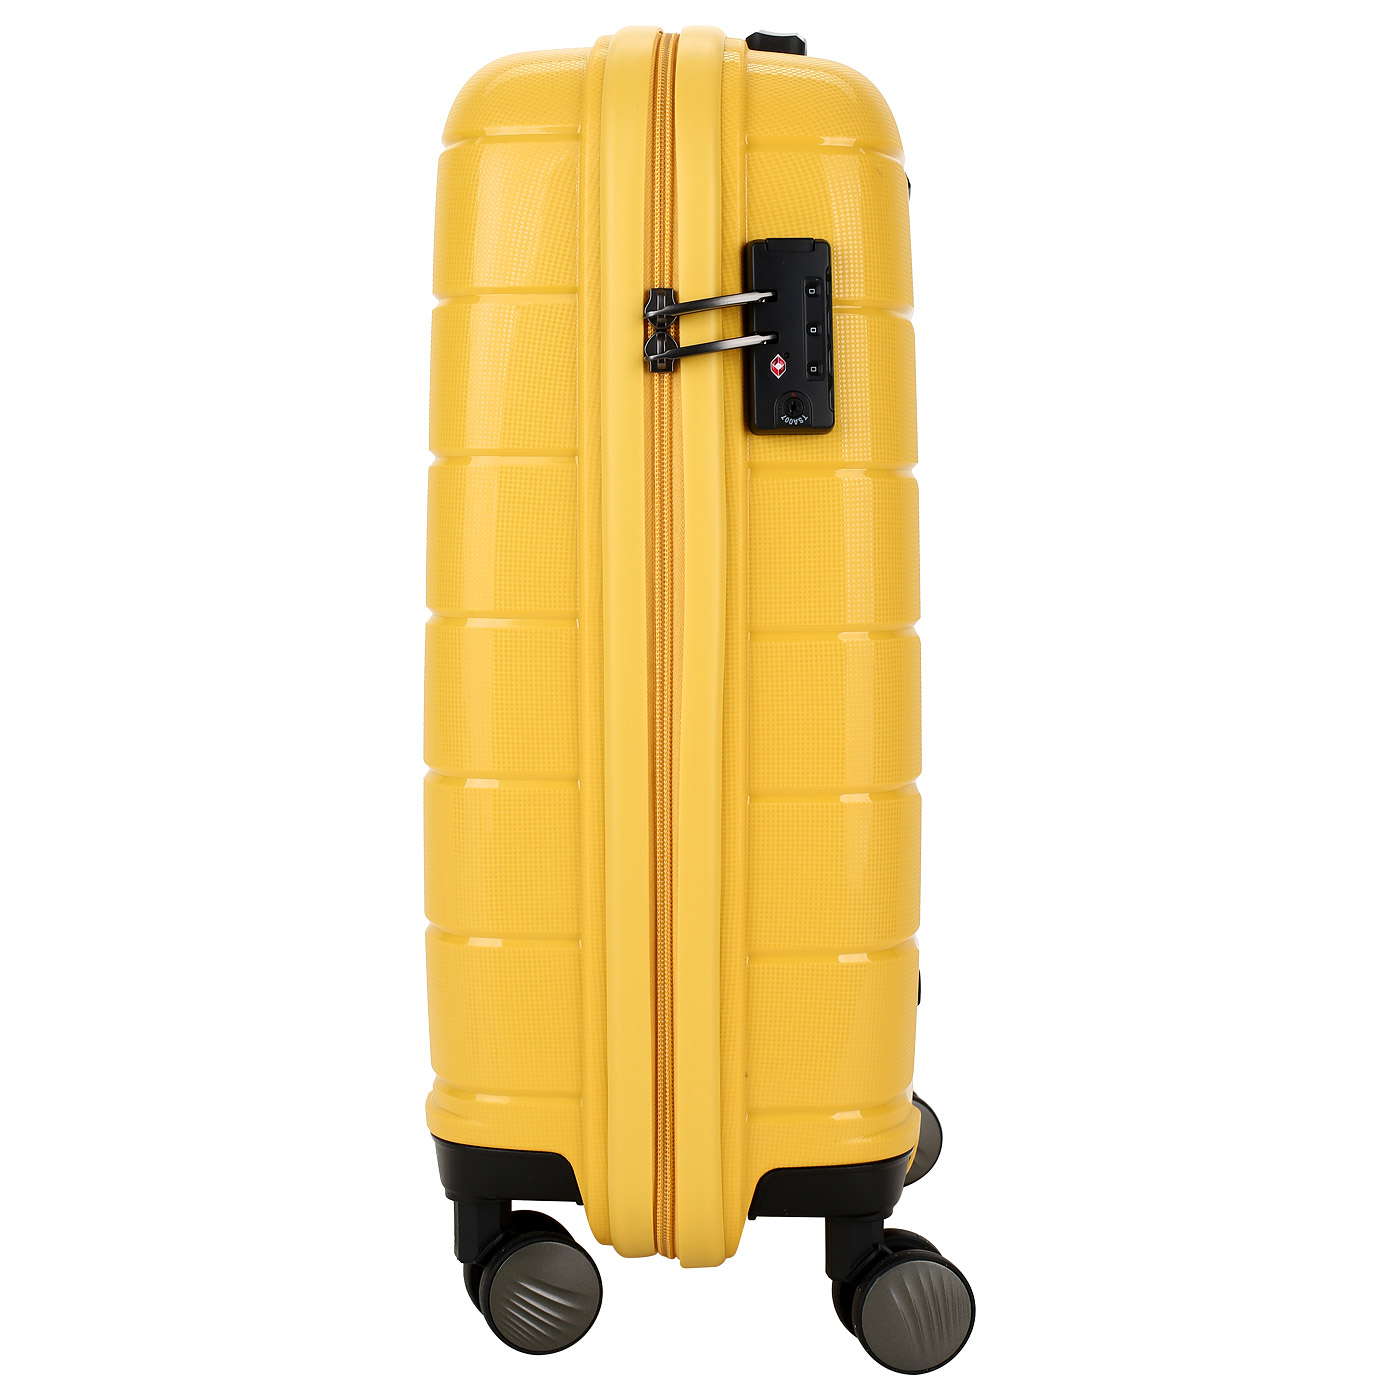 Маленький чемодан из желтого пластика Stevens Oxford